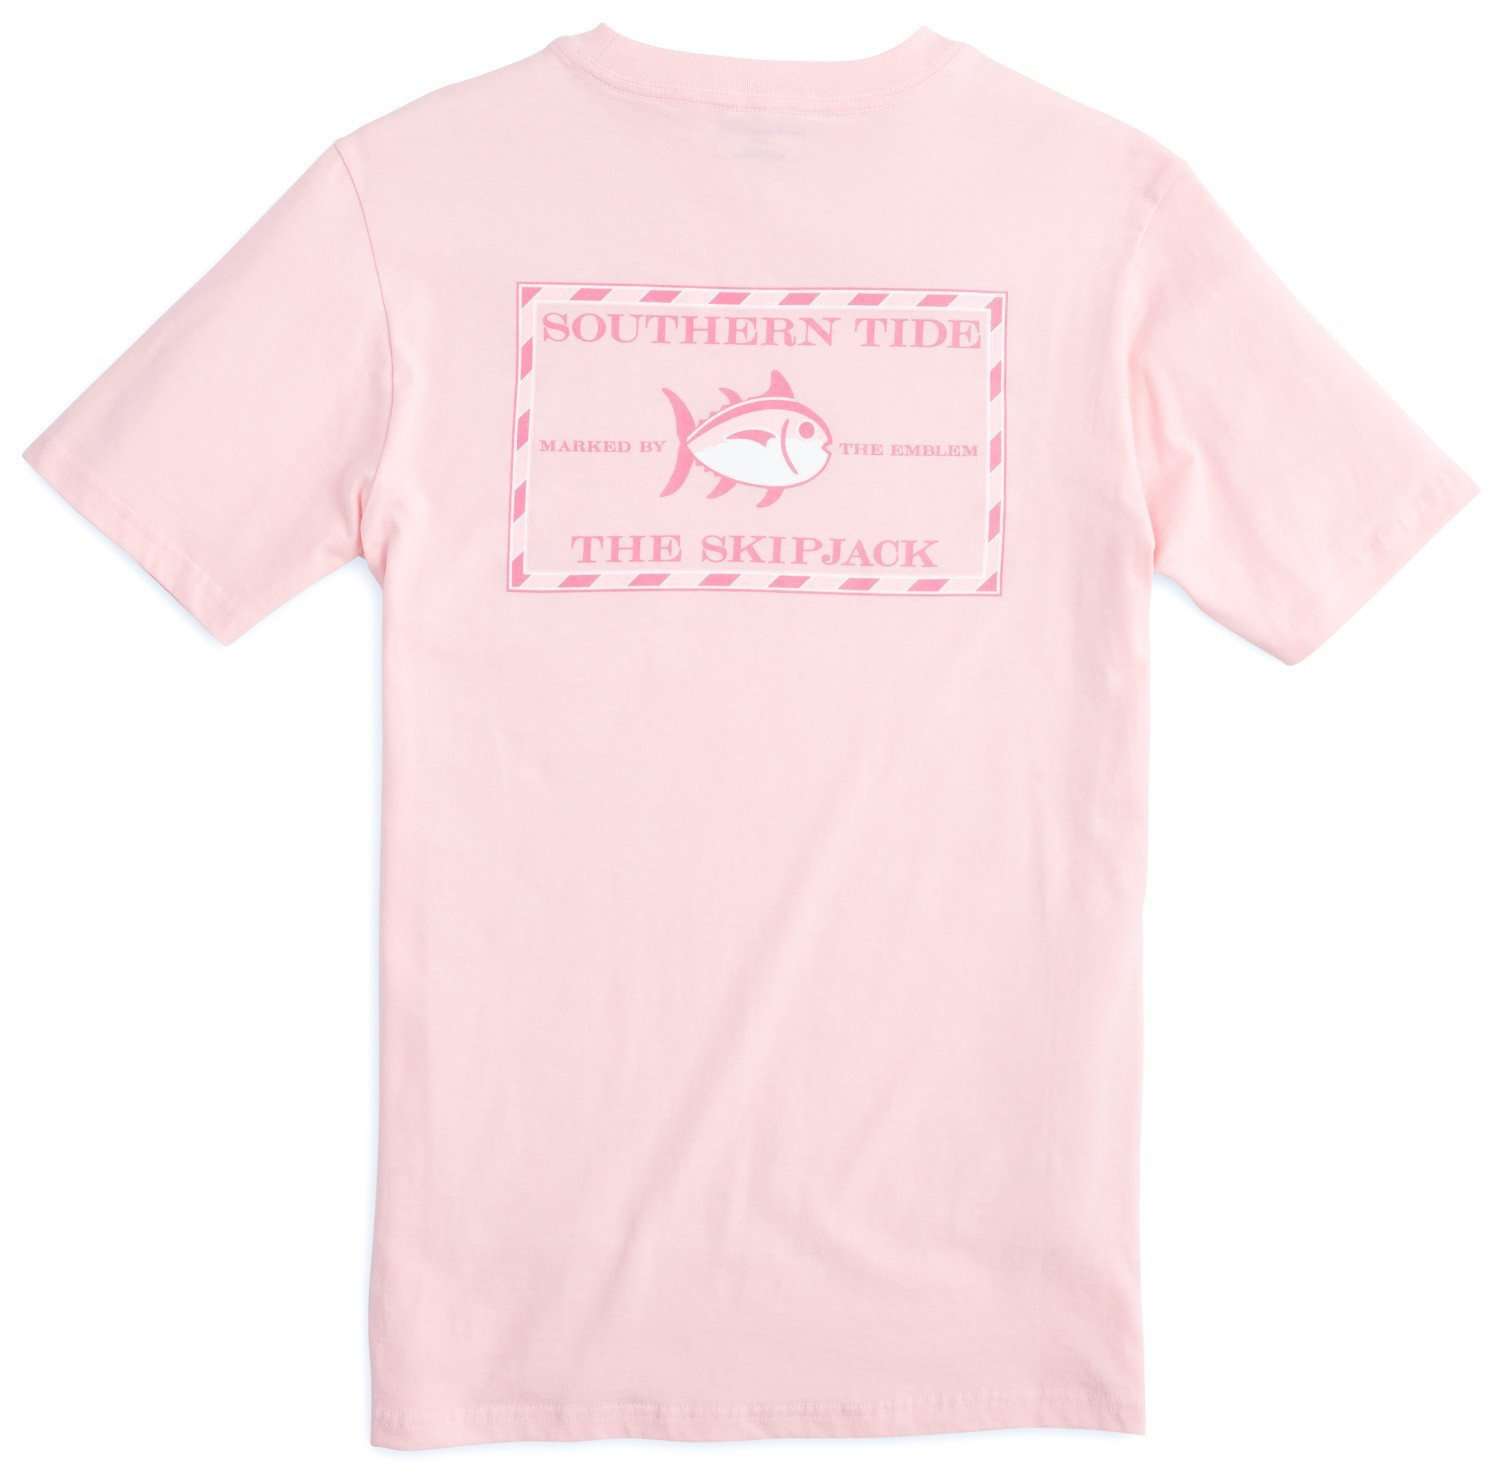 Ladies Original Skipjack Tee Shirt in Light Pink by Southern Tide - Country Club Prep